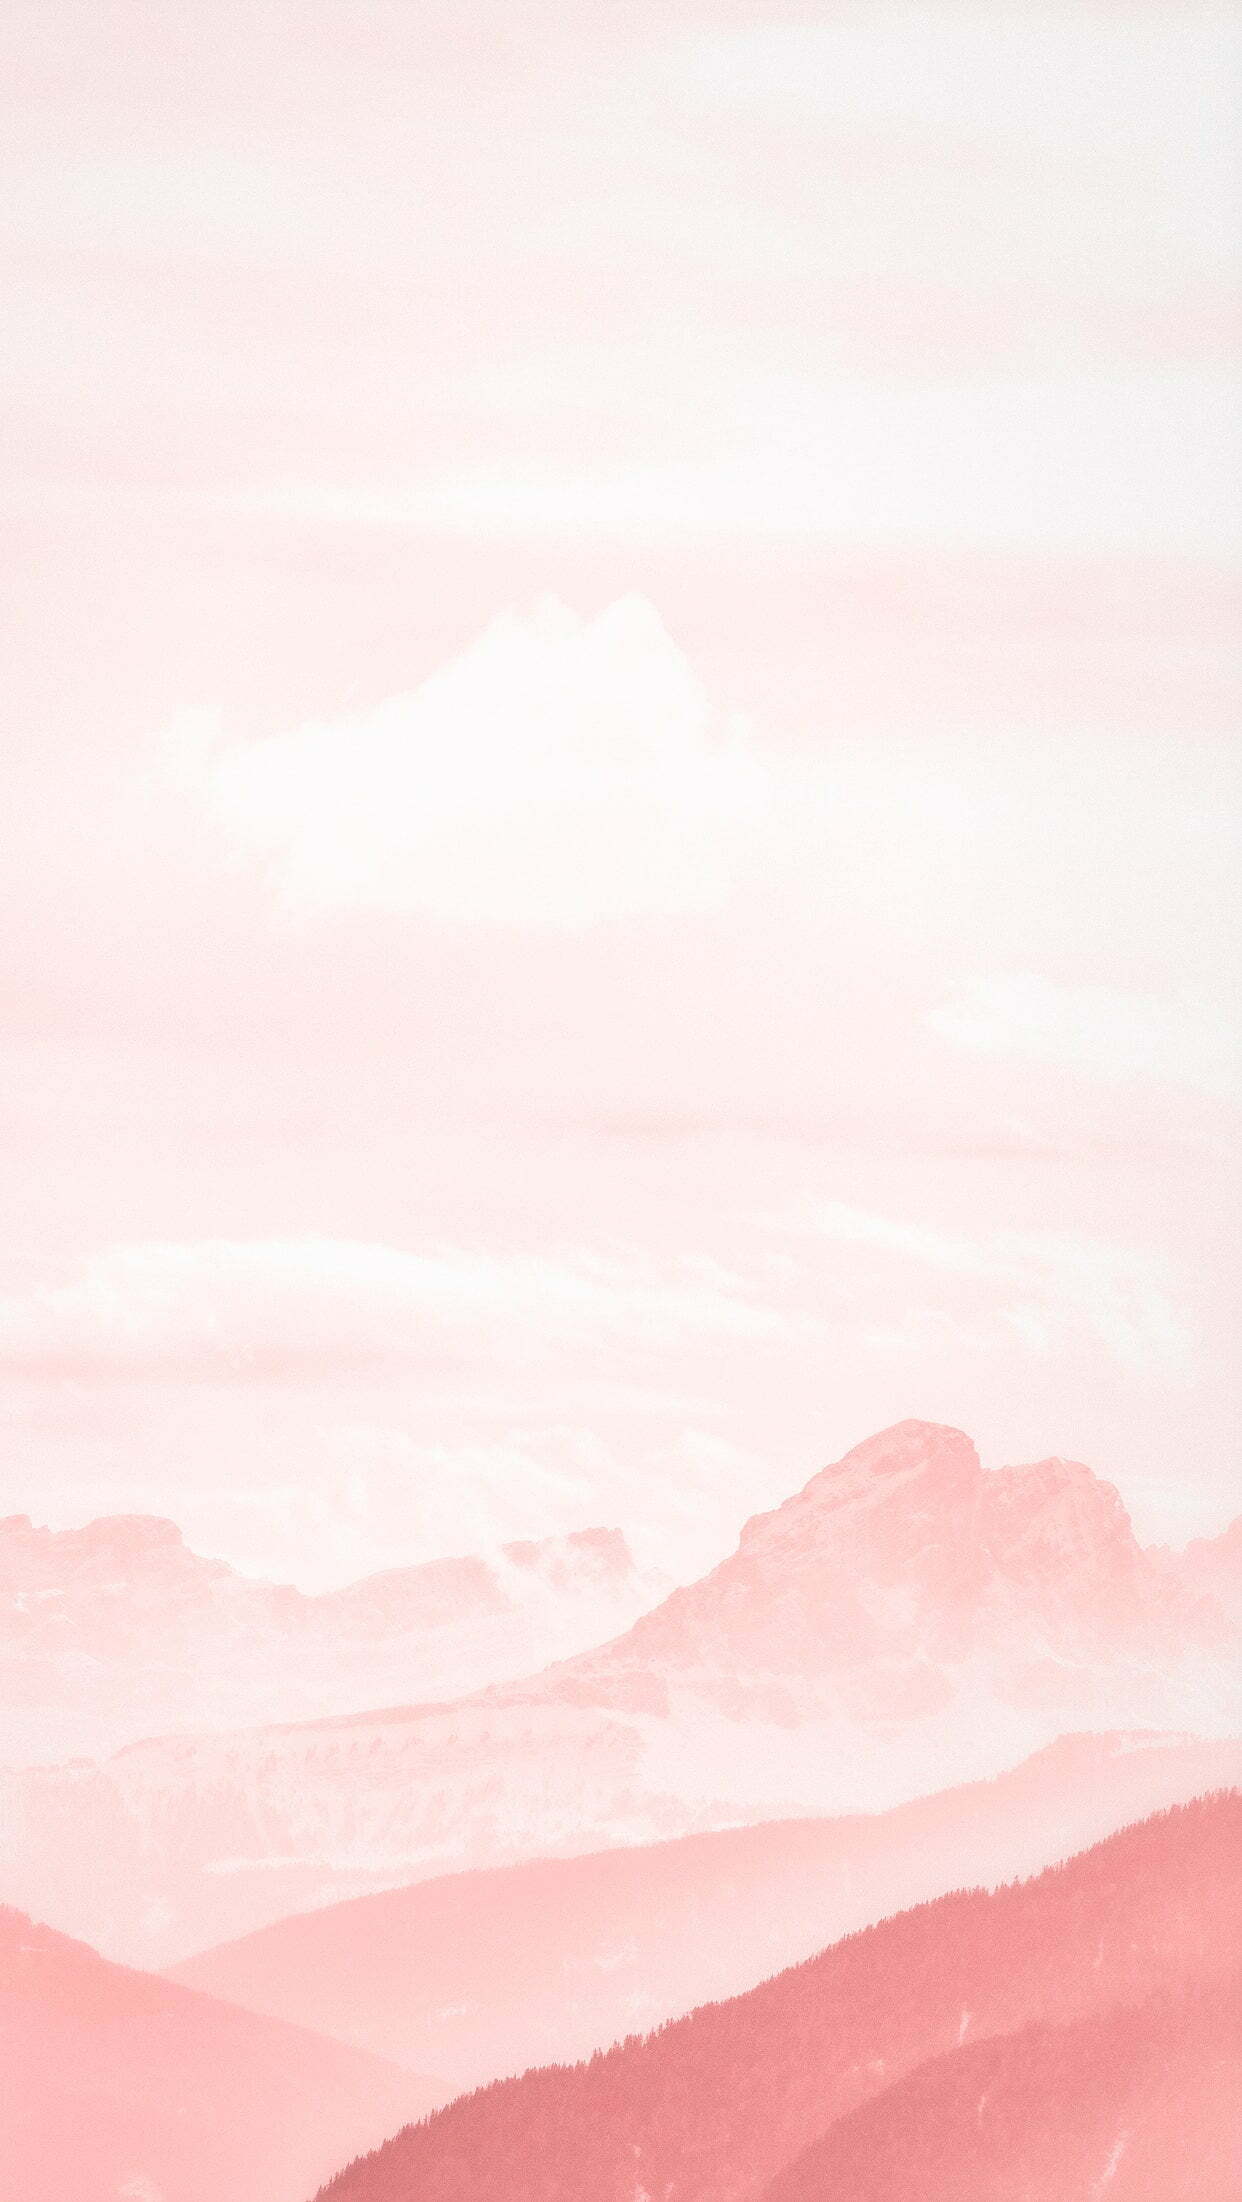 Pink wallpaper, Best iPhone Wallpaper and iPhone background, WallpaperUpdate, Best iPhone Wallpaper and iPhone background